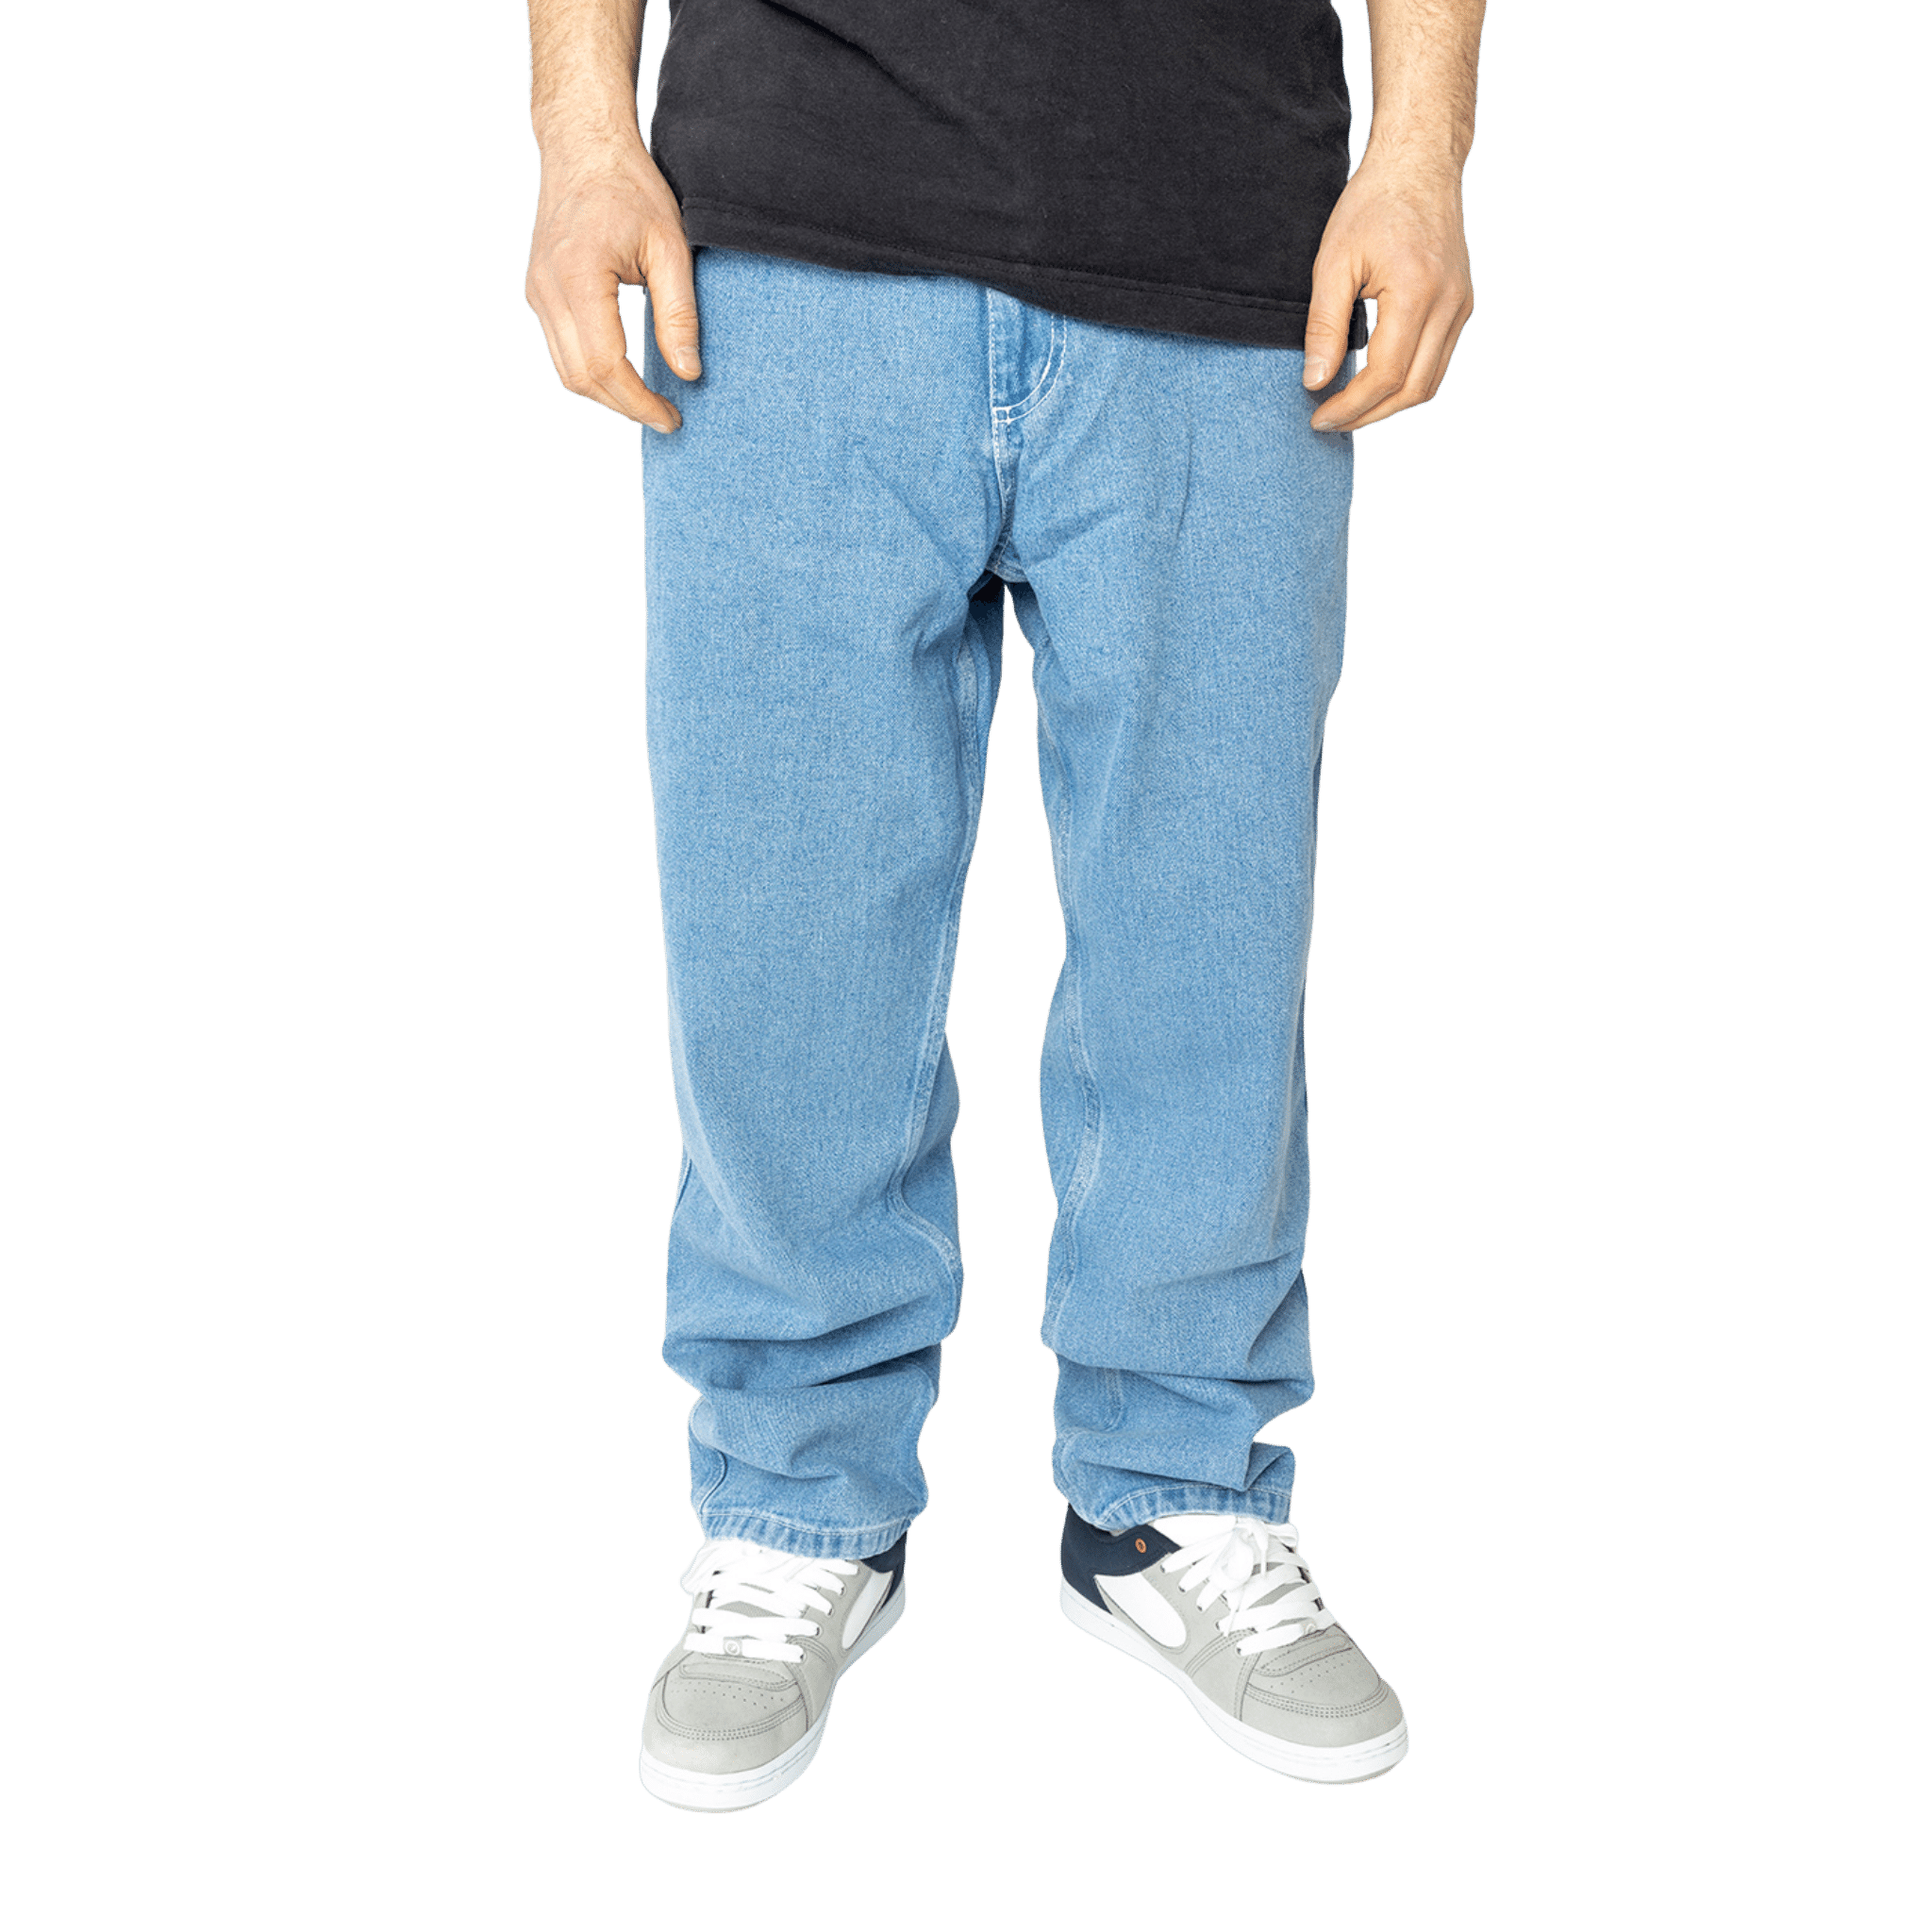 Bigfoot White Denim Jeans